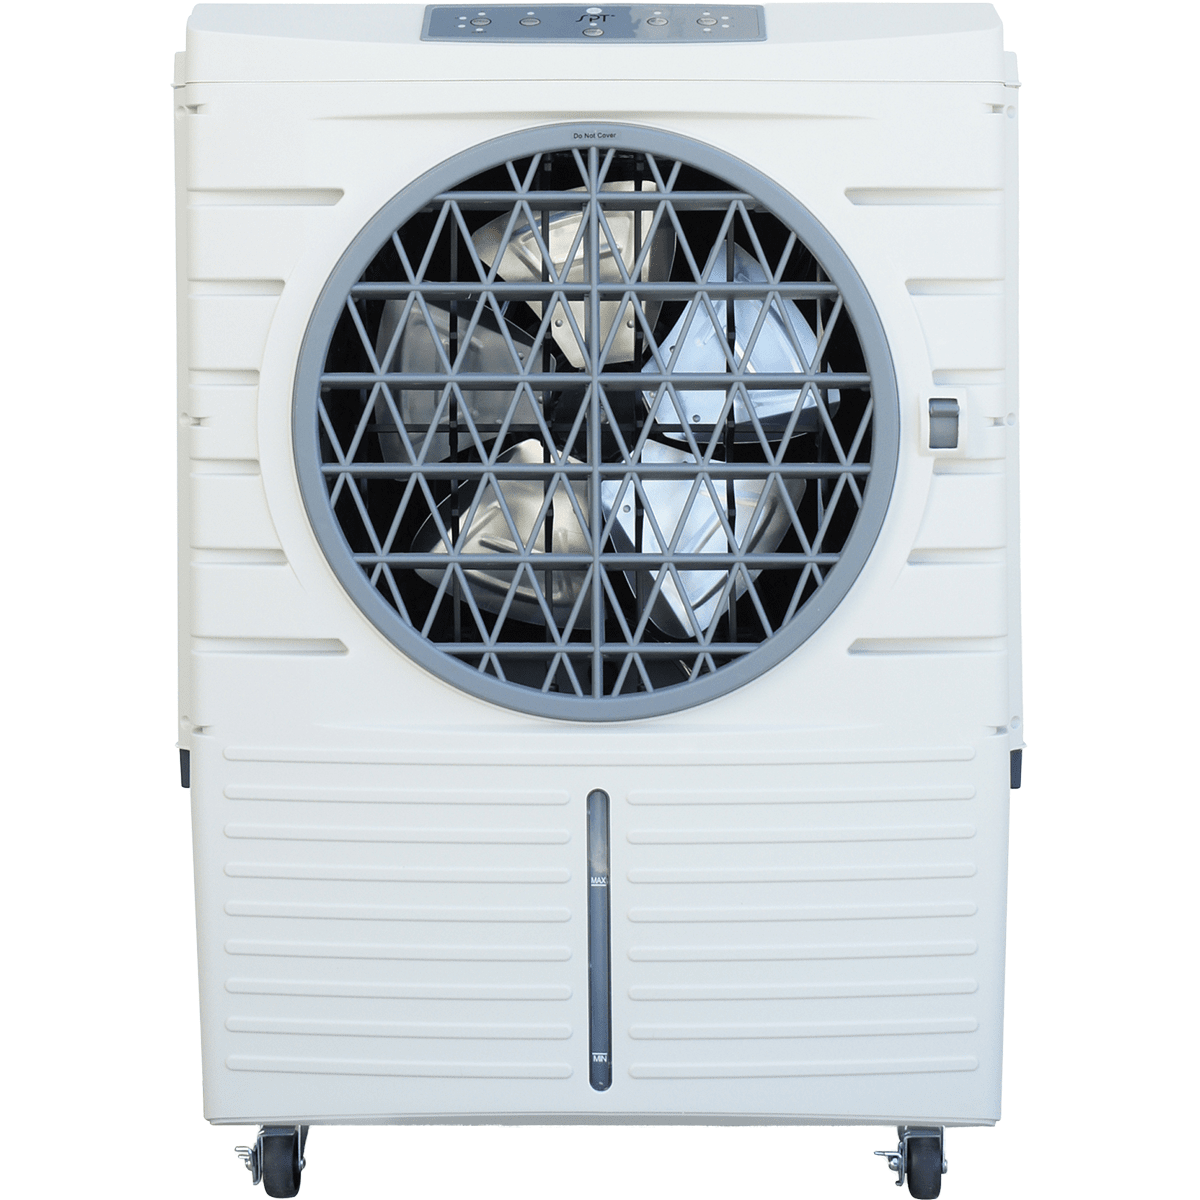 Sunpentown Sf-48lb Heavy-duty Indoor/outdoor Evaporative Air Cooler With Remote Control